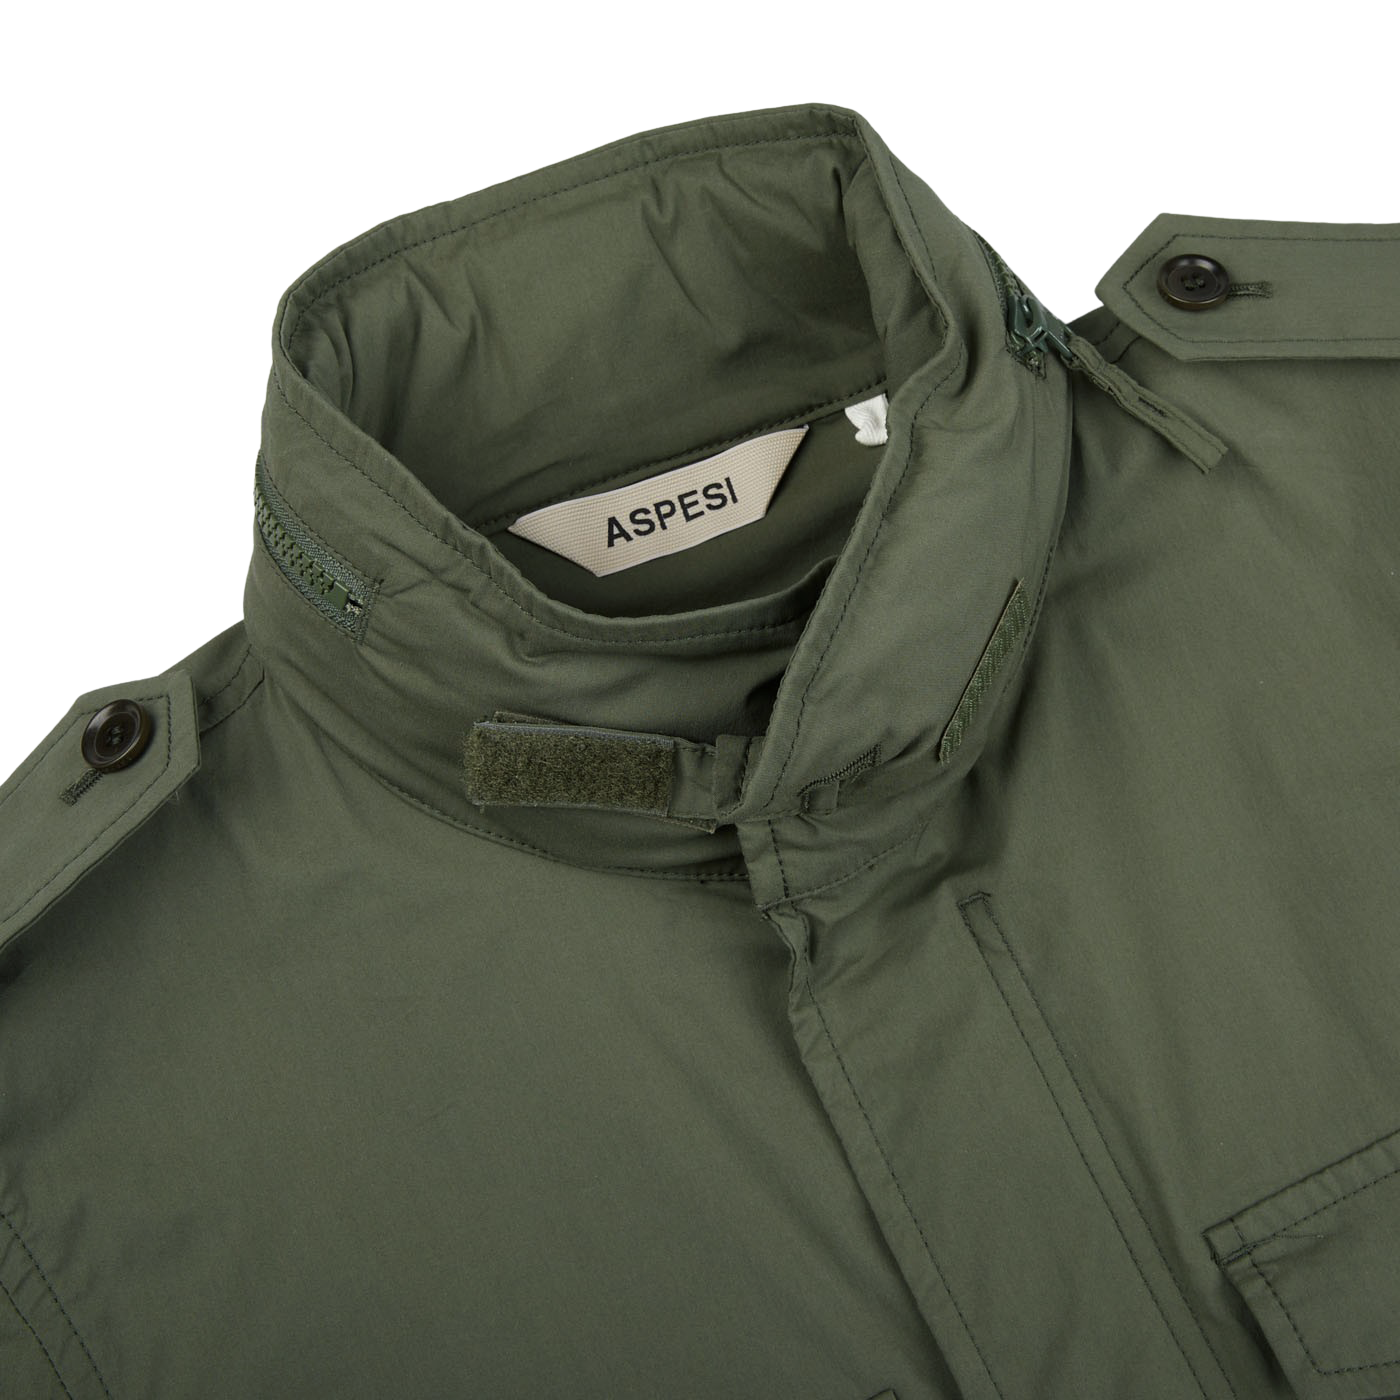 An Aspesi Green Cotton Nylon M65 Field Jacket with a zippered collar.